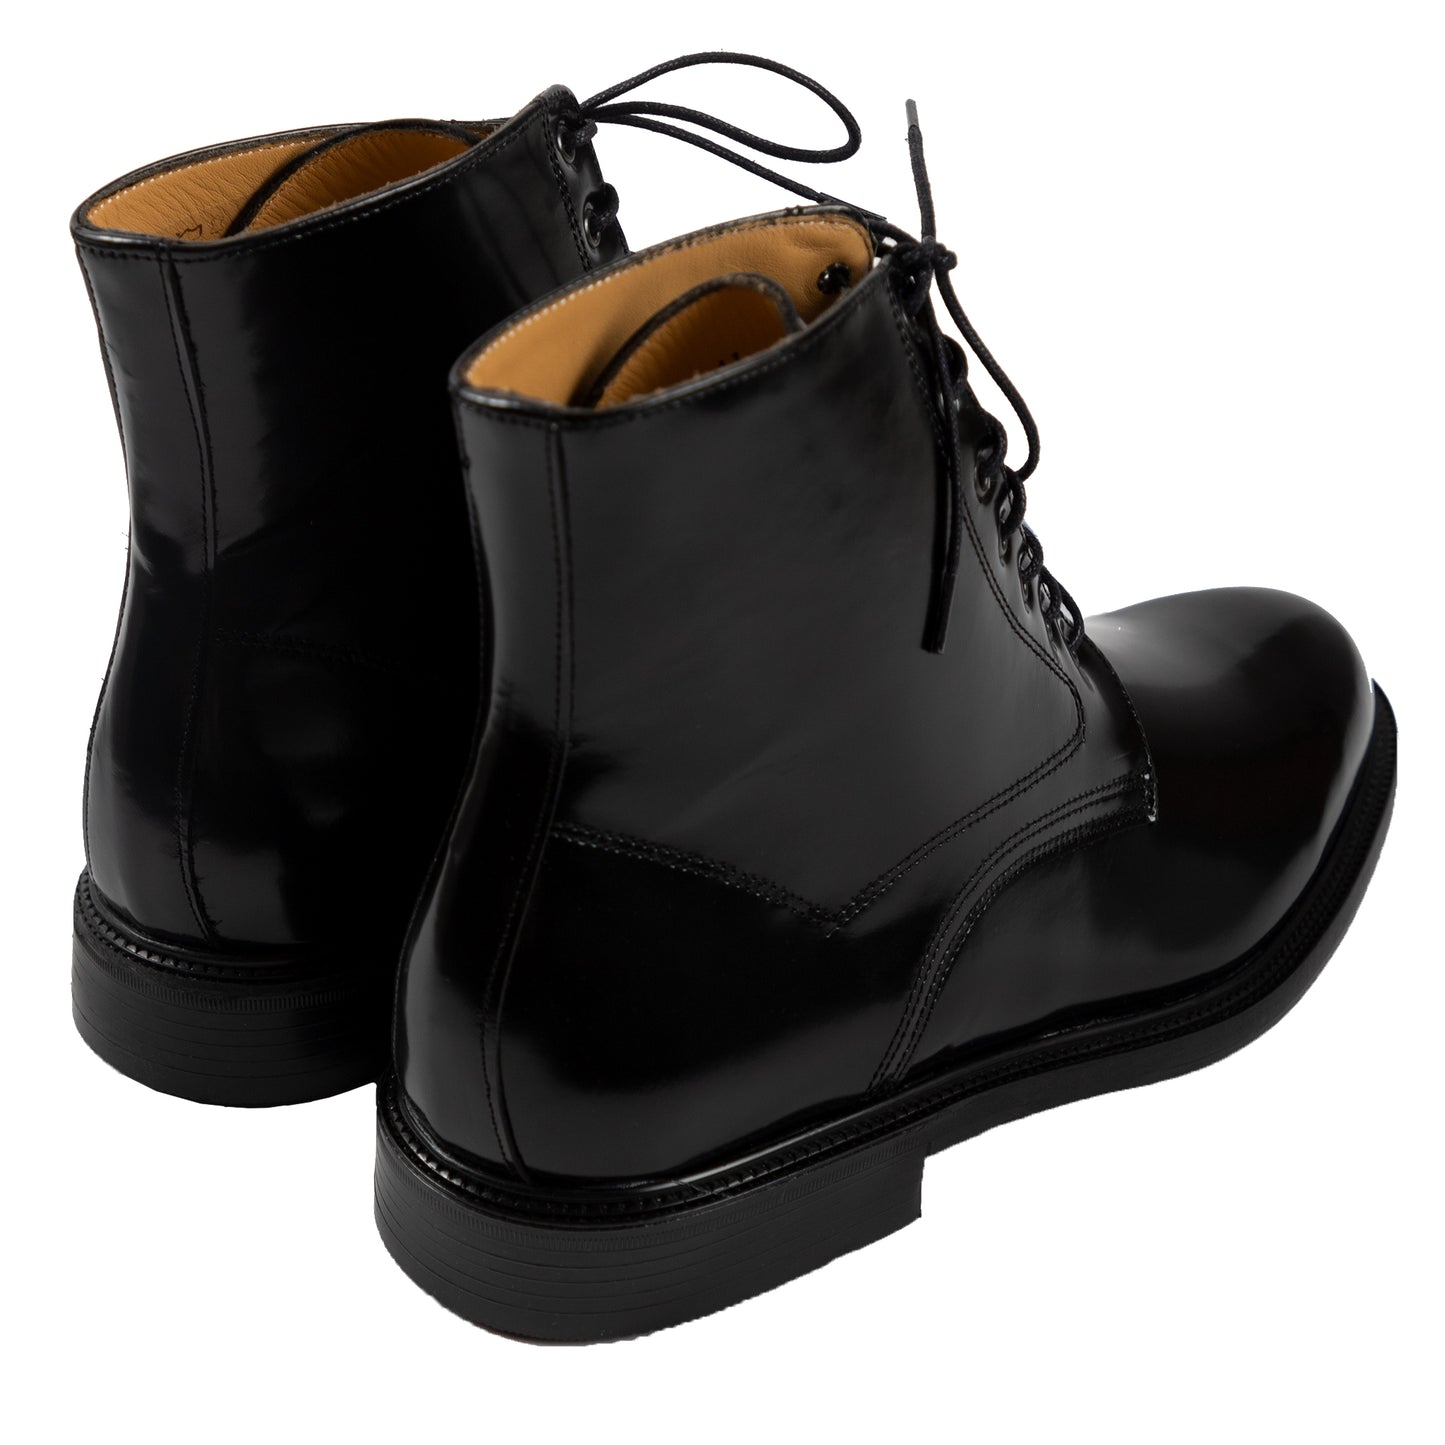 Kleman Boule Vernis Boot Footwear Shoe Workwear Lace Up Black